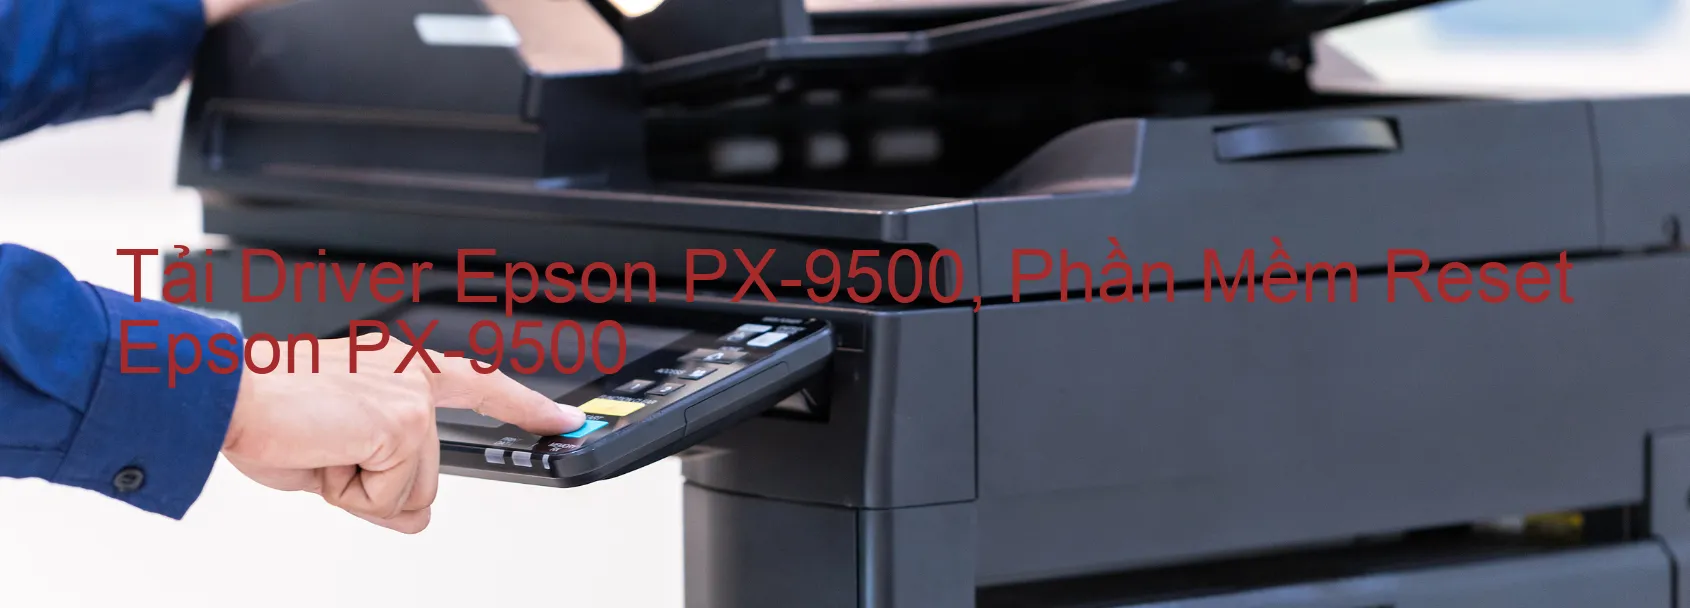 Driver Epson PX-9500, Phần Mềm Reset Epson PX-9500